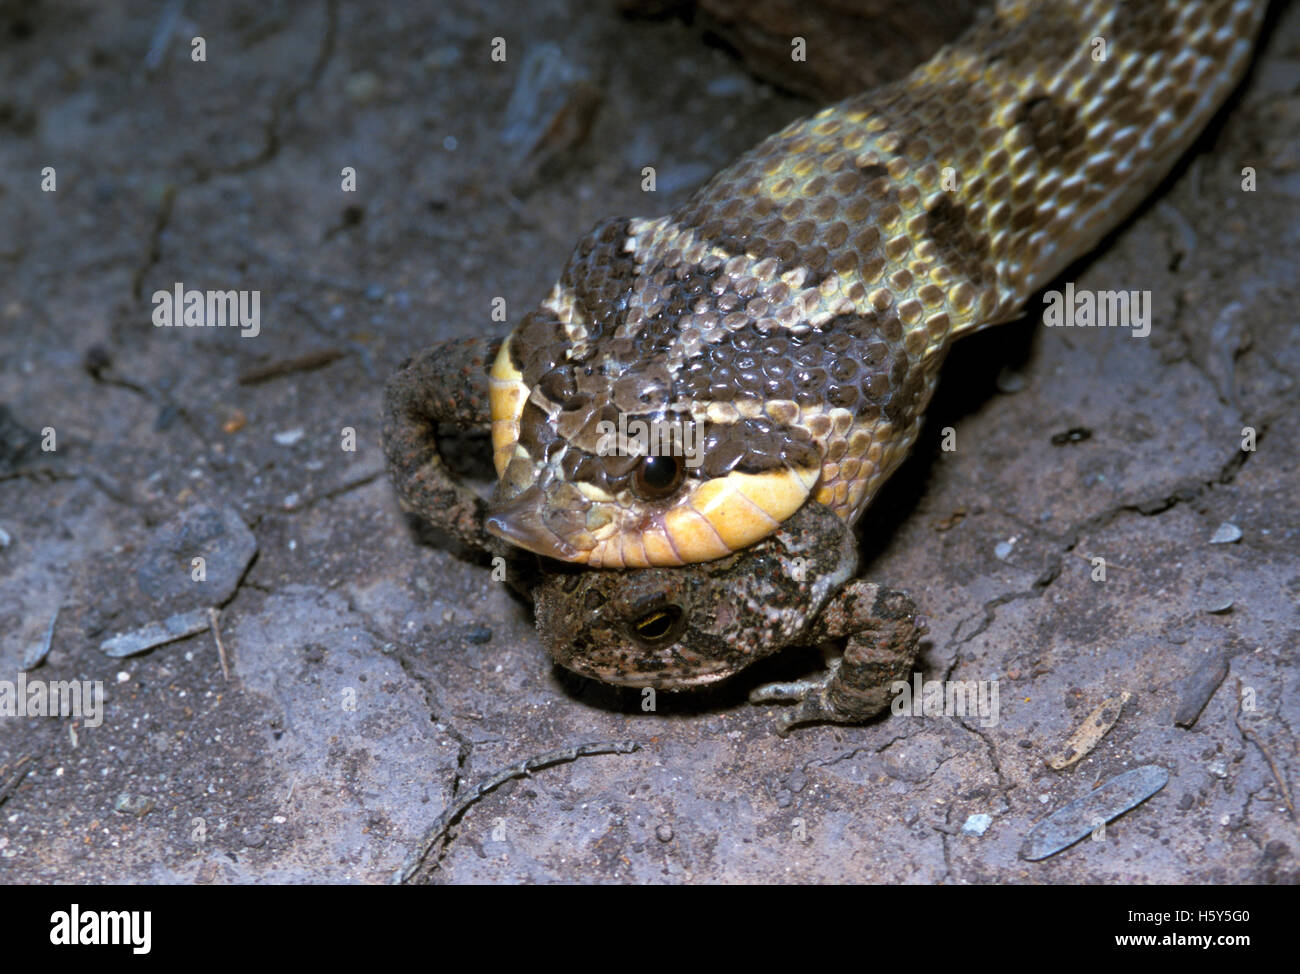 Western Hog-nosed Snake  Heterodon nasicus kennerlyi Chiricahua Mountains, Cochise County, Arizona, United States August 2001 Stock Photo